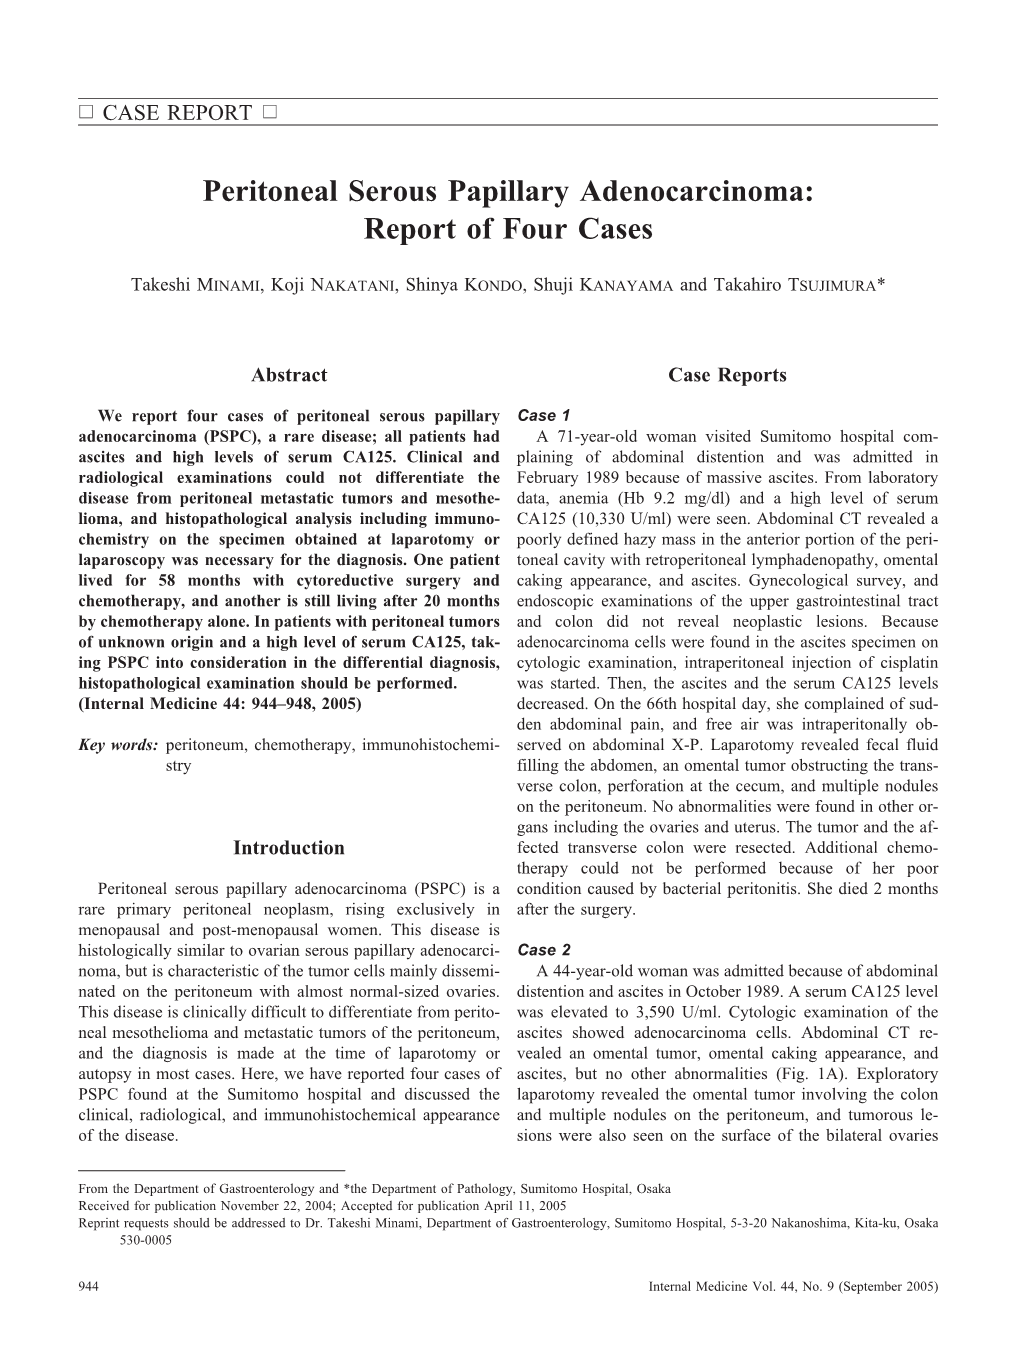 Peritoneal Serous Papillary Adenocarcinoma: Report of Four Cases